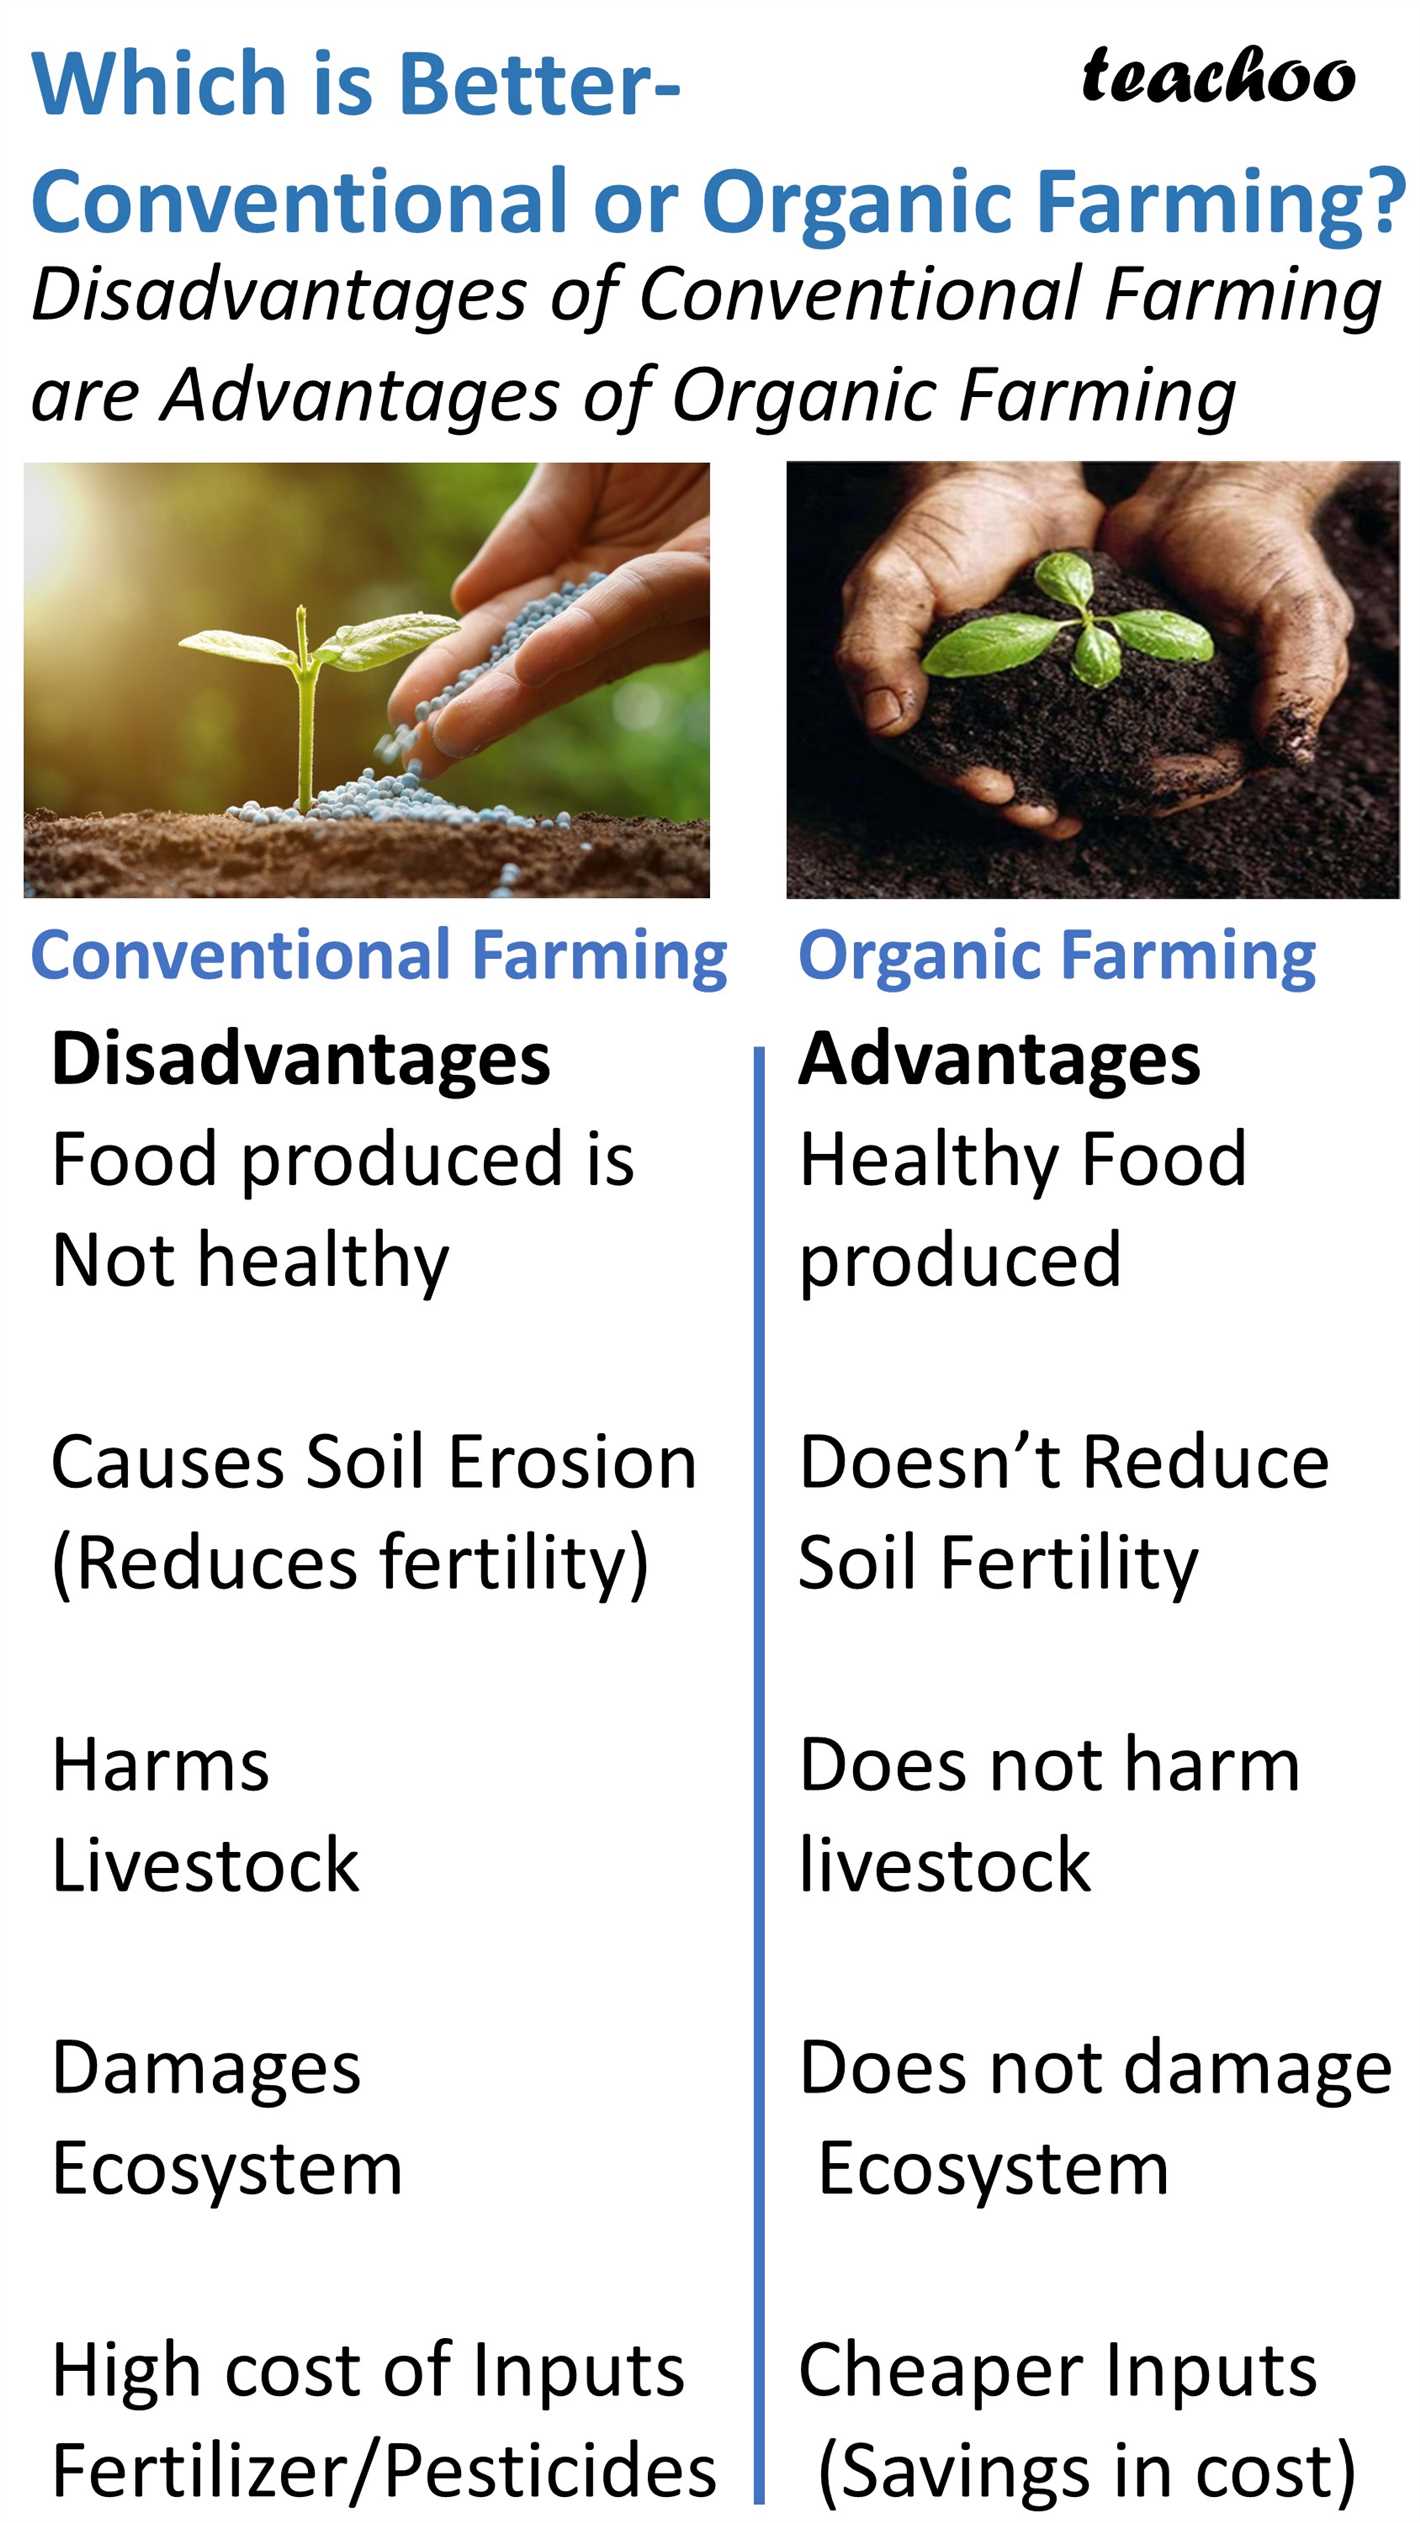 No Genetically Modified Organisms (GMOs)